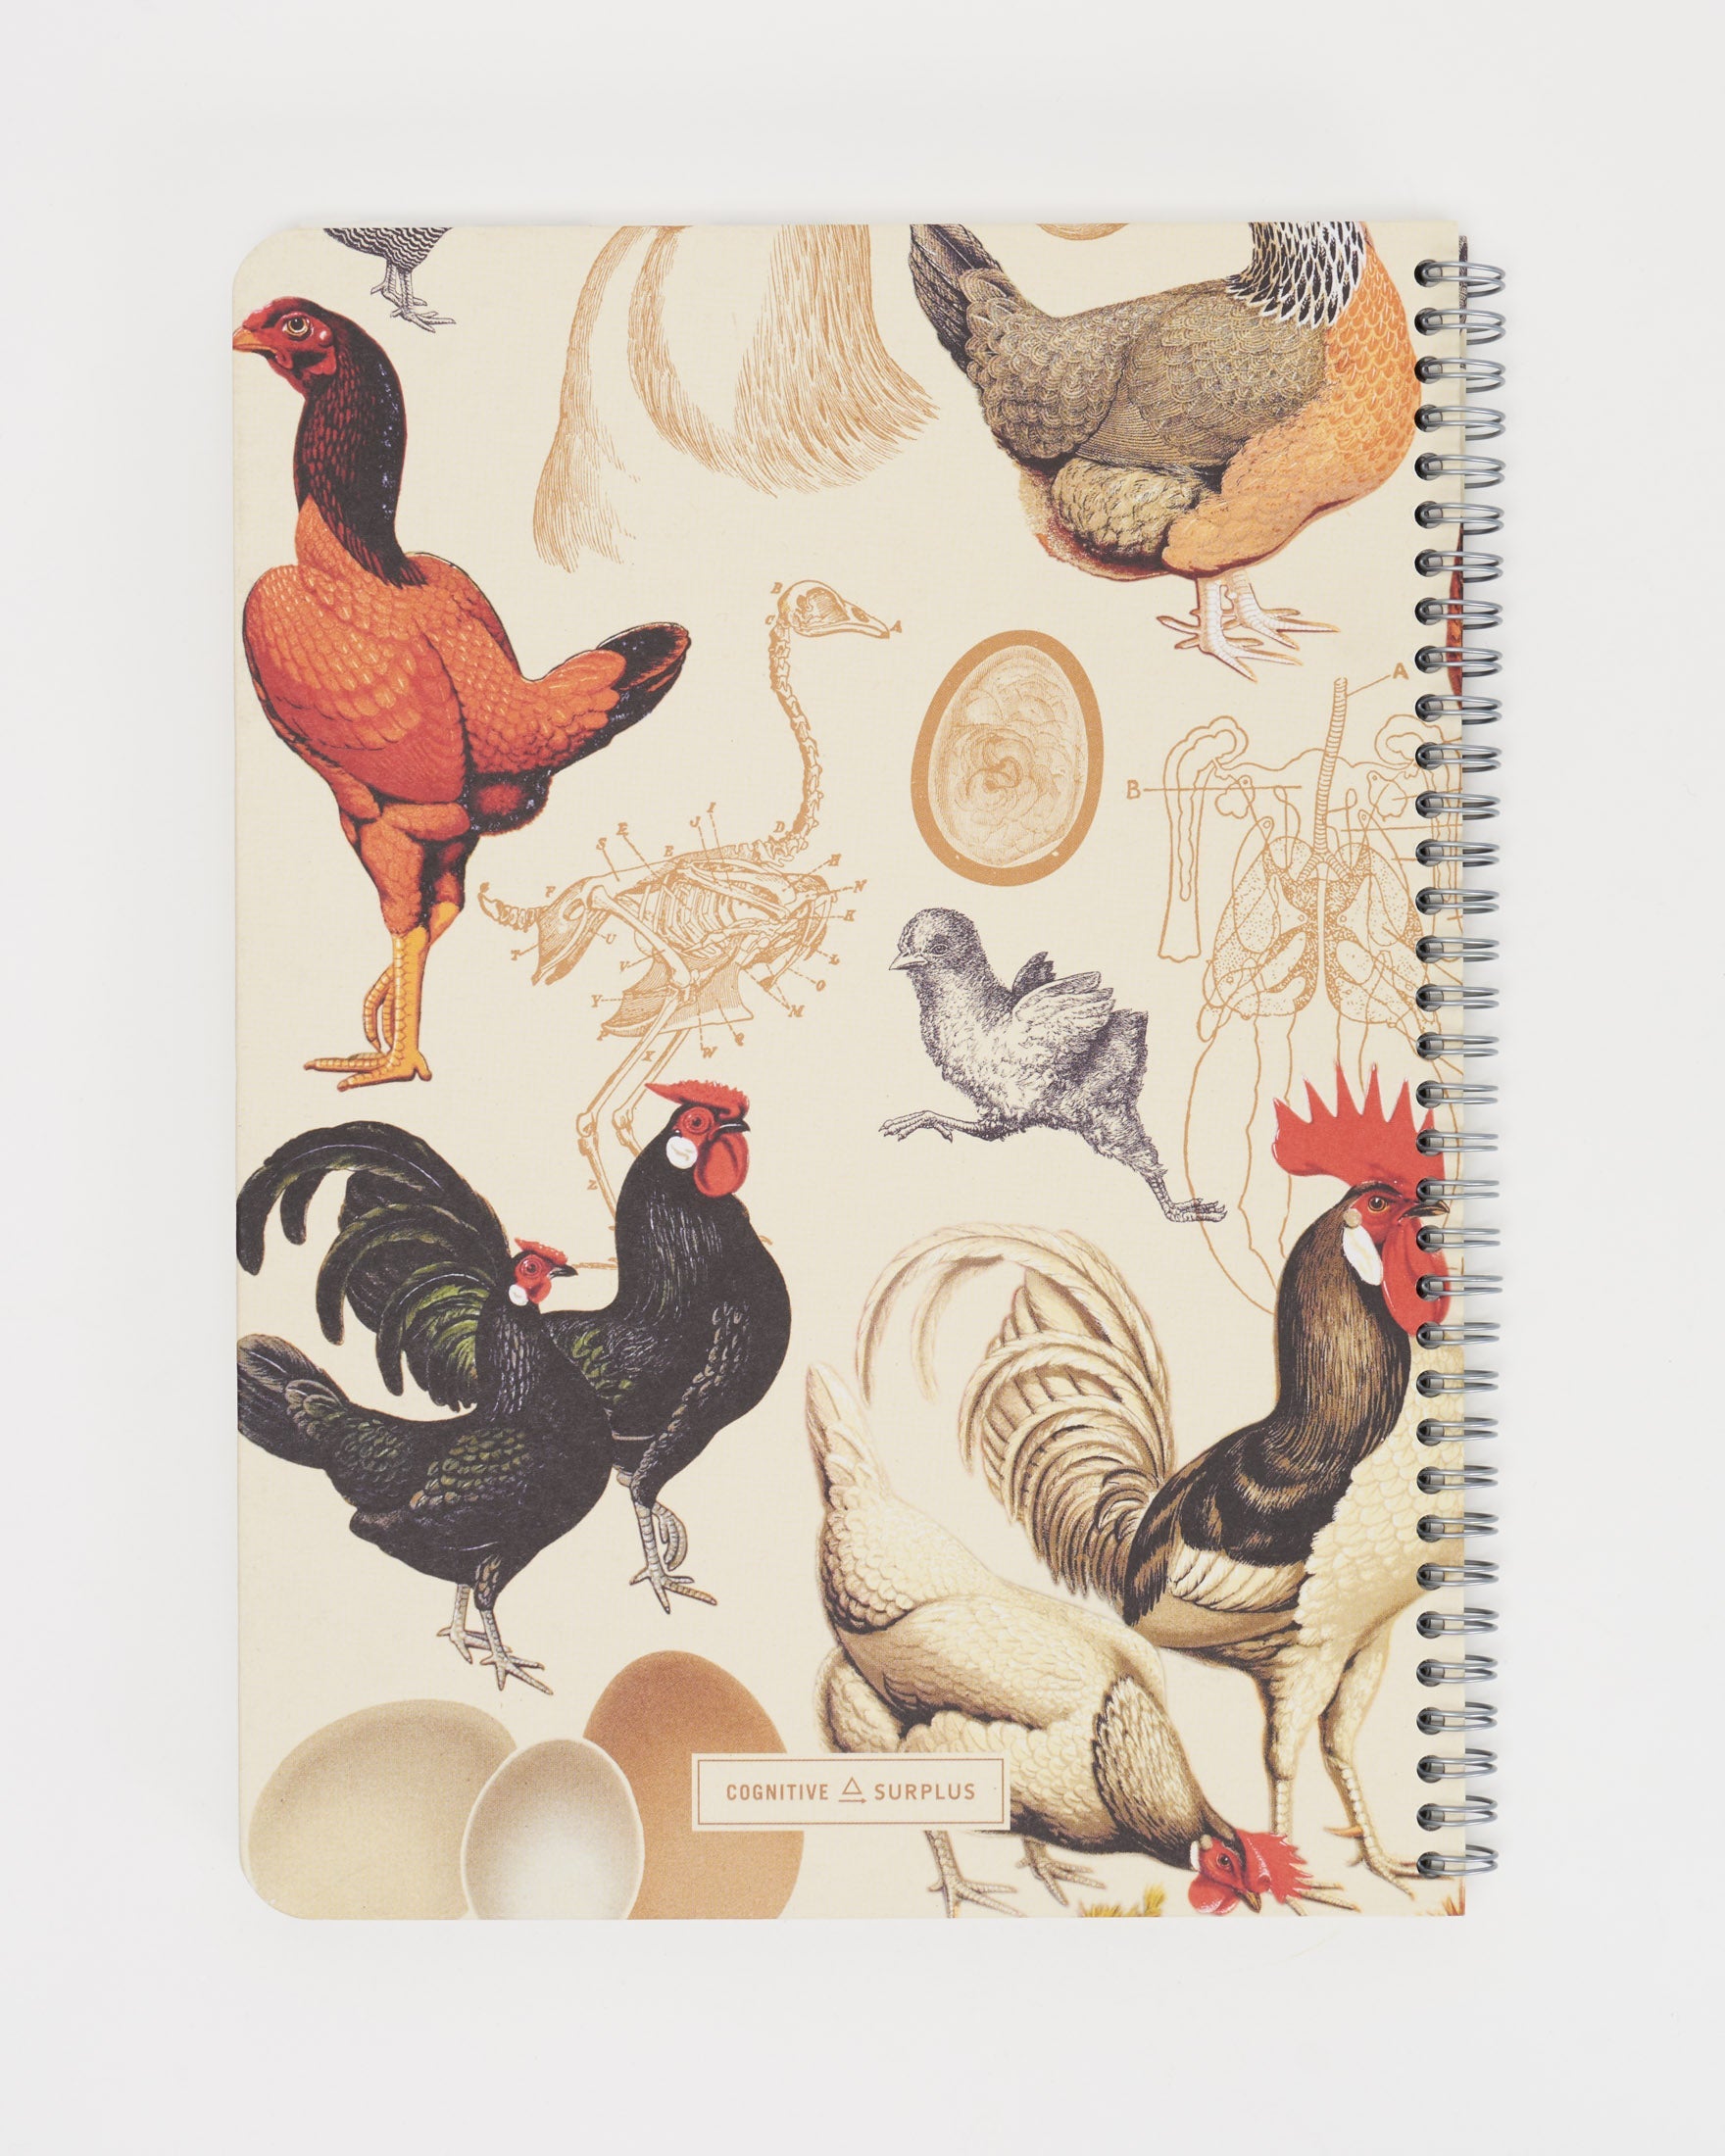 Backyard Birds: Chickens Spiral Notebook